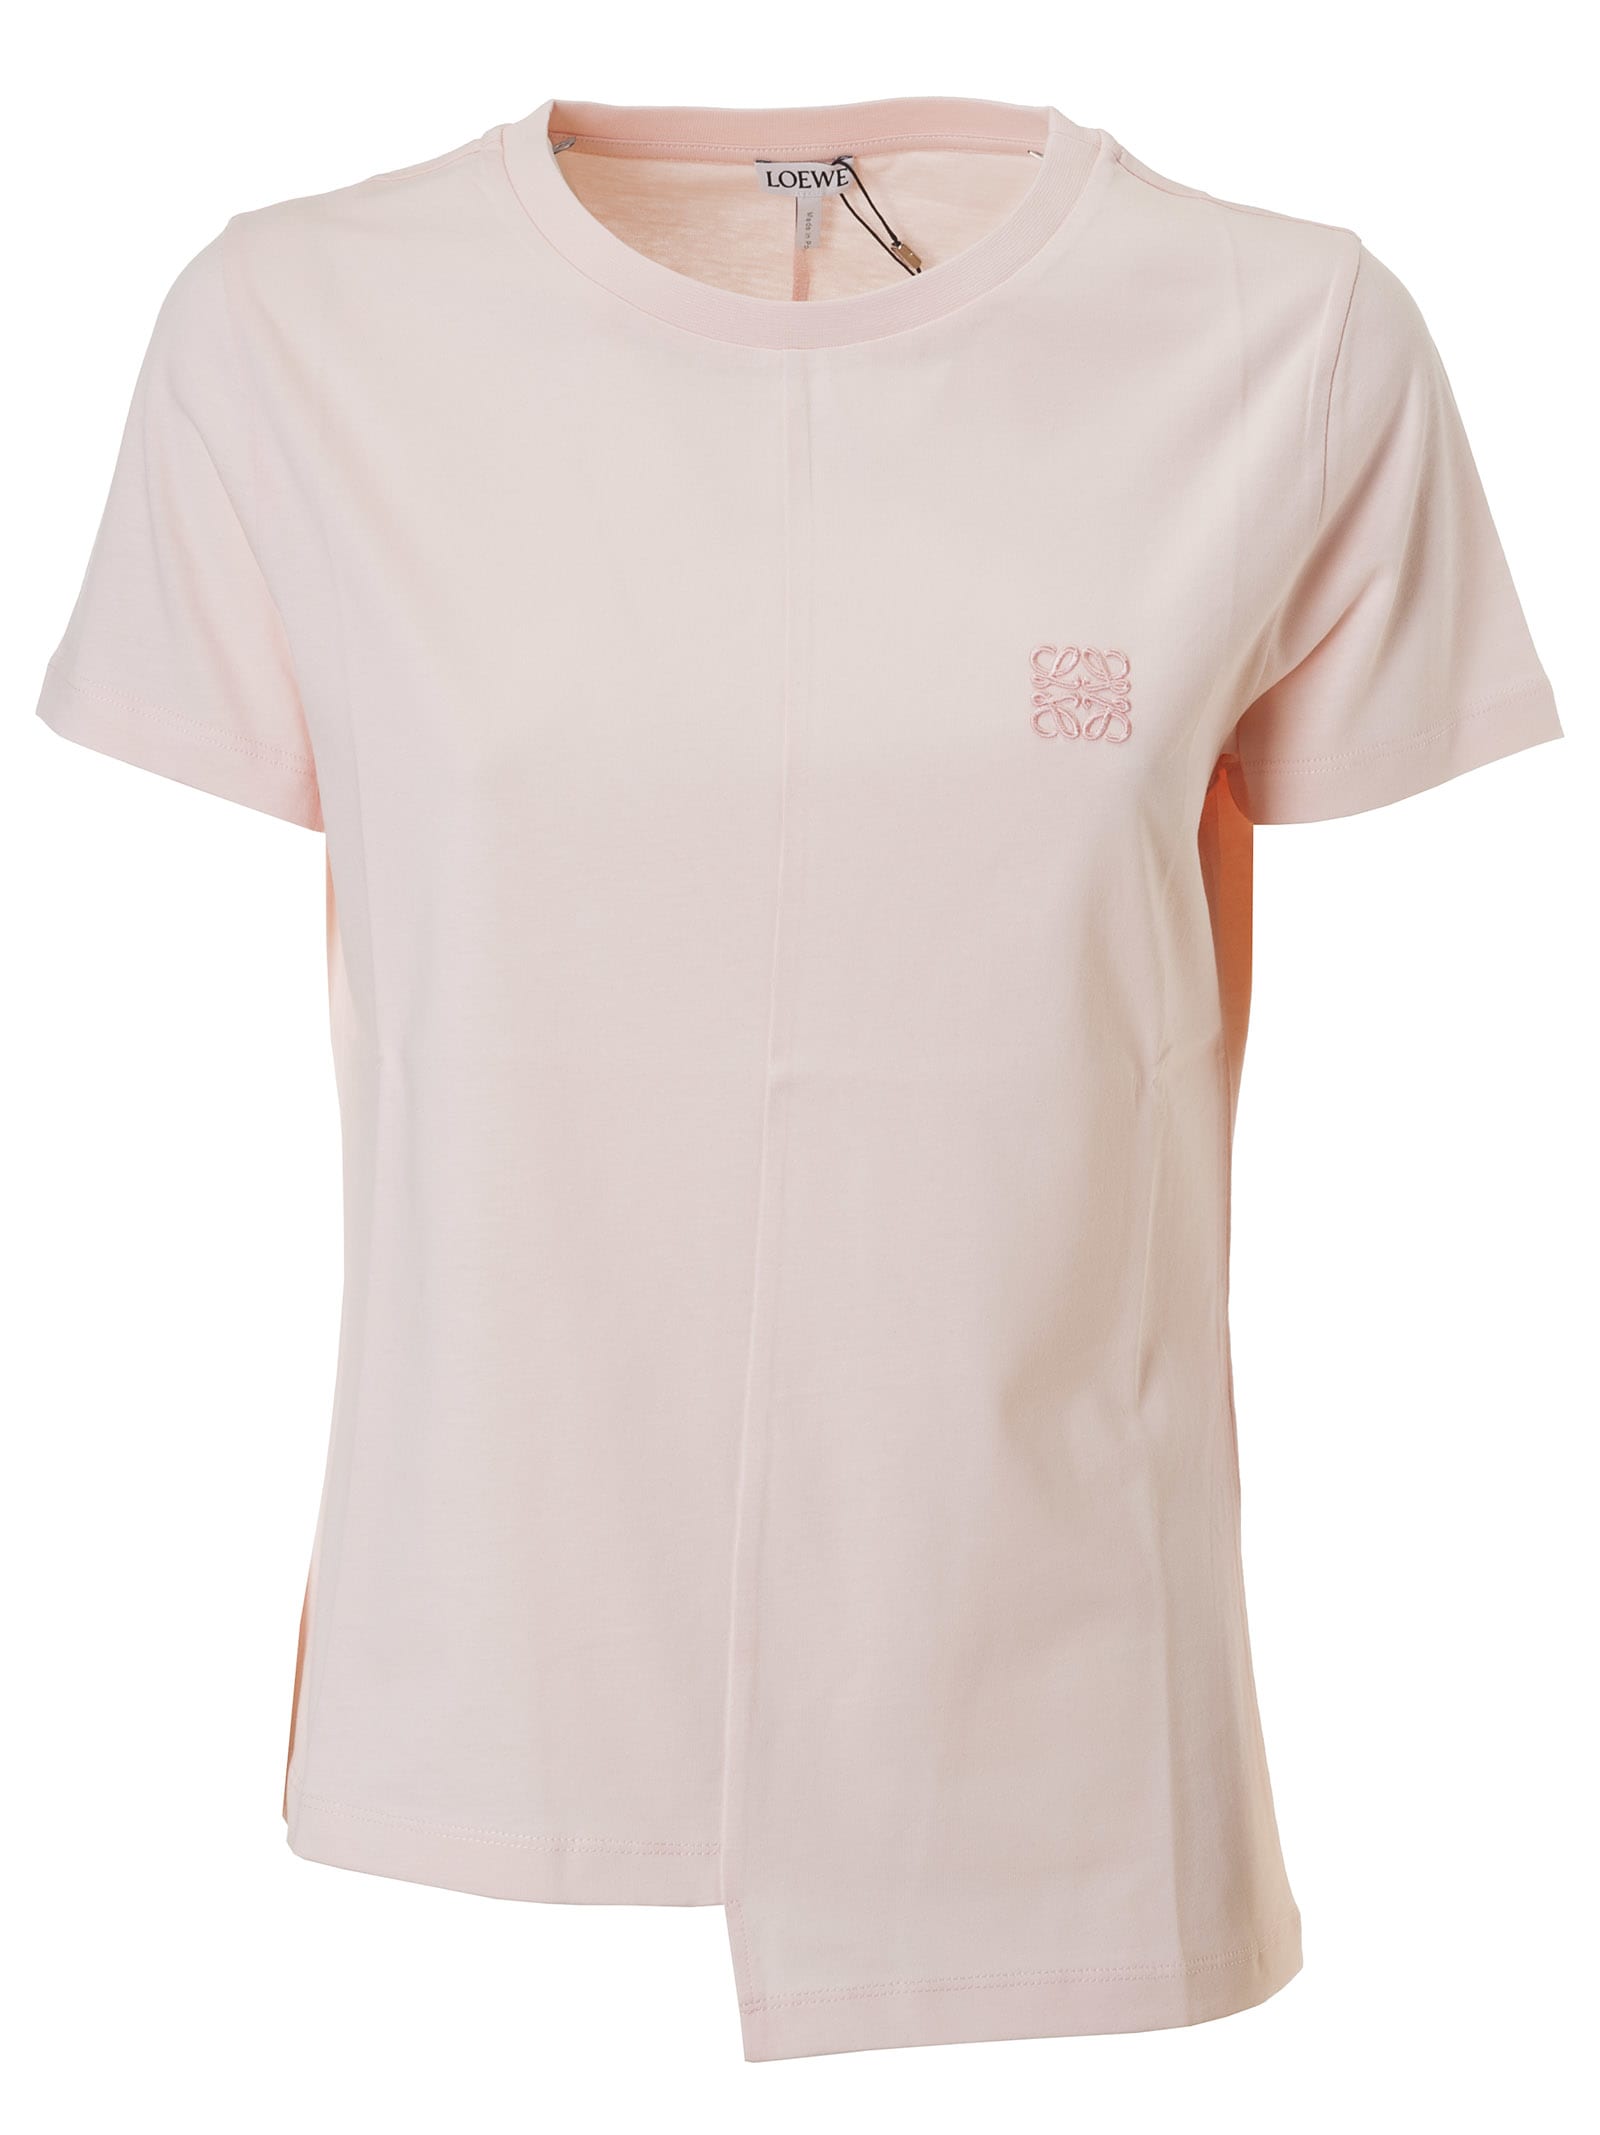 Loewe Short Sleeve T-Shirts | italist, ALWAYS LIKE A SALE